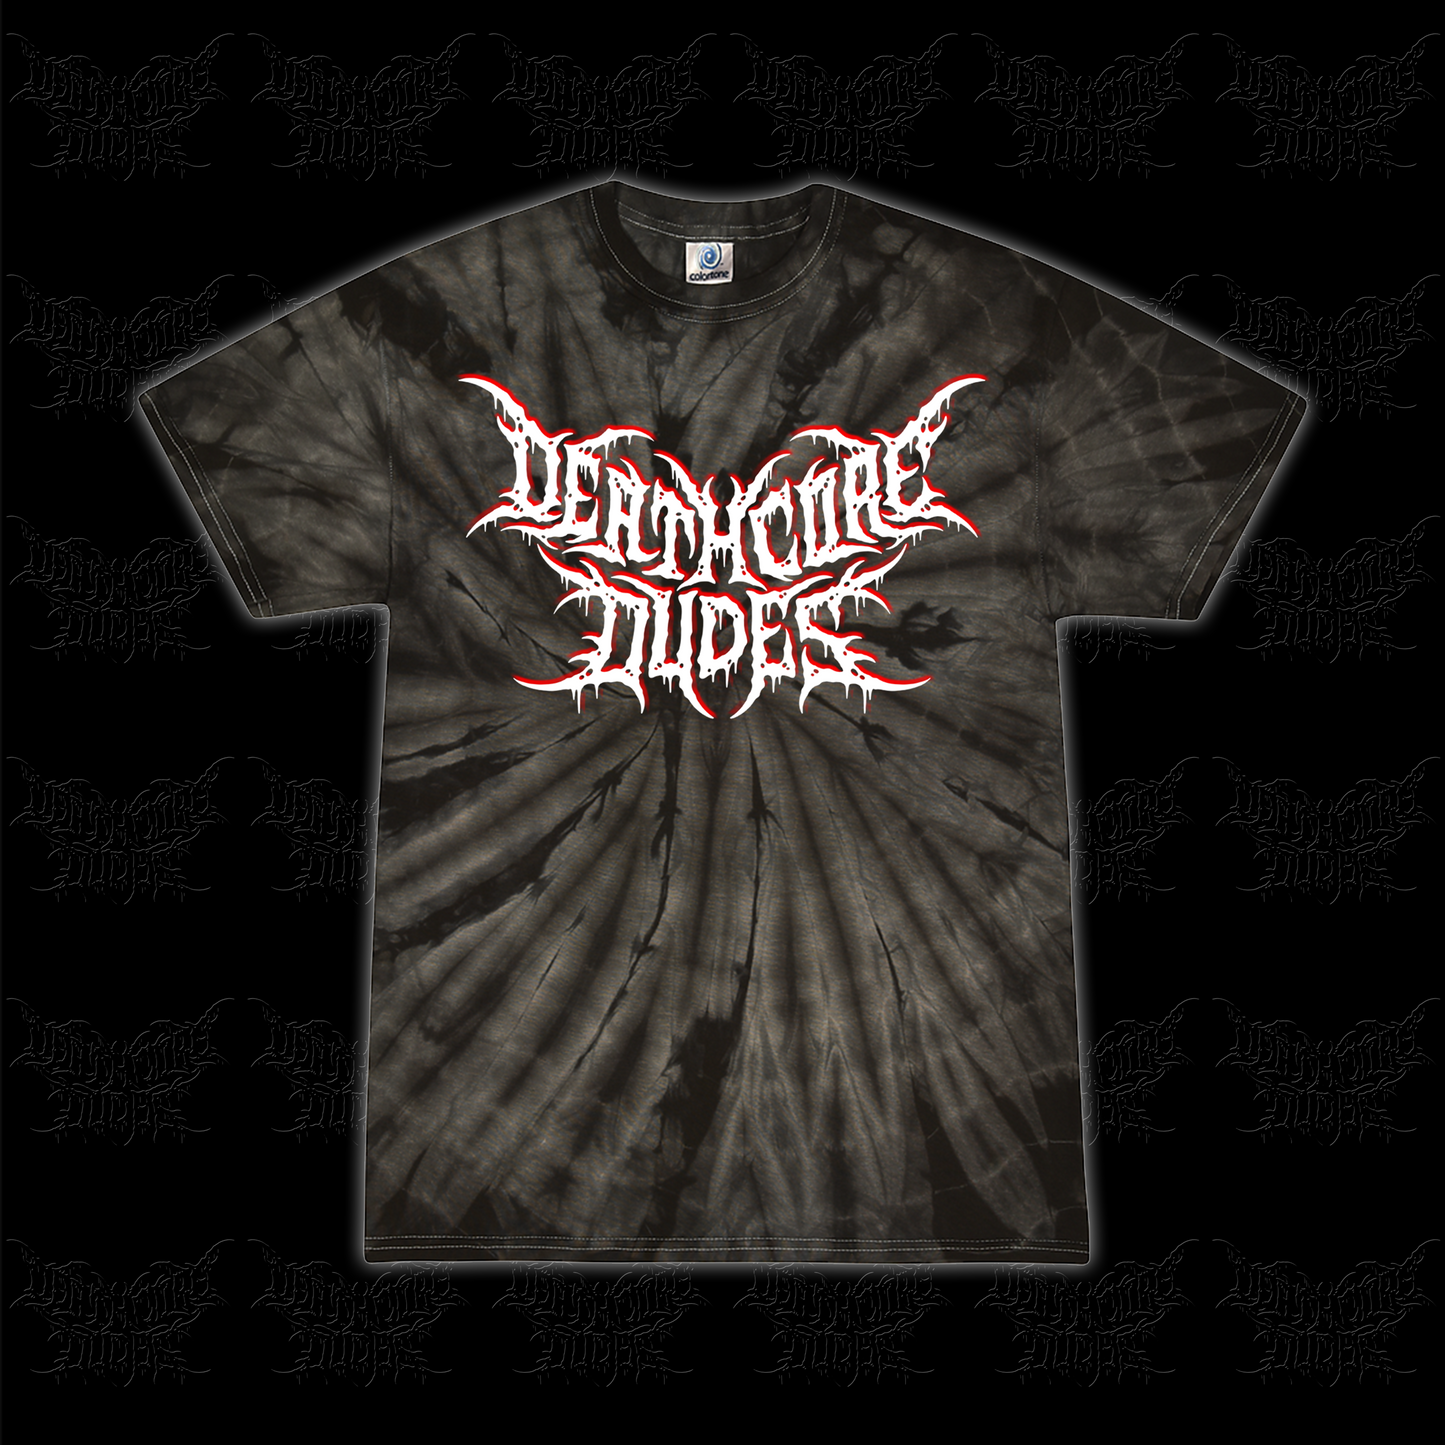 DEATHCORE DUDES T-Shirt (Black Spiral Dye)